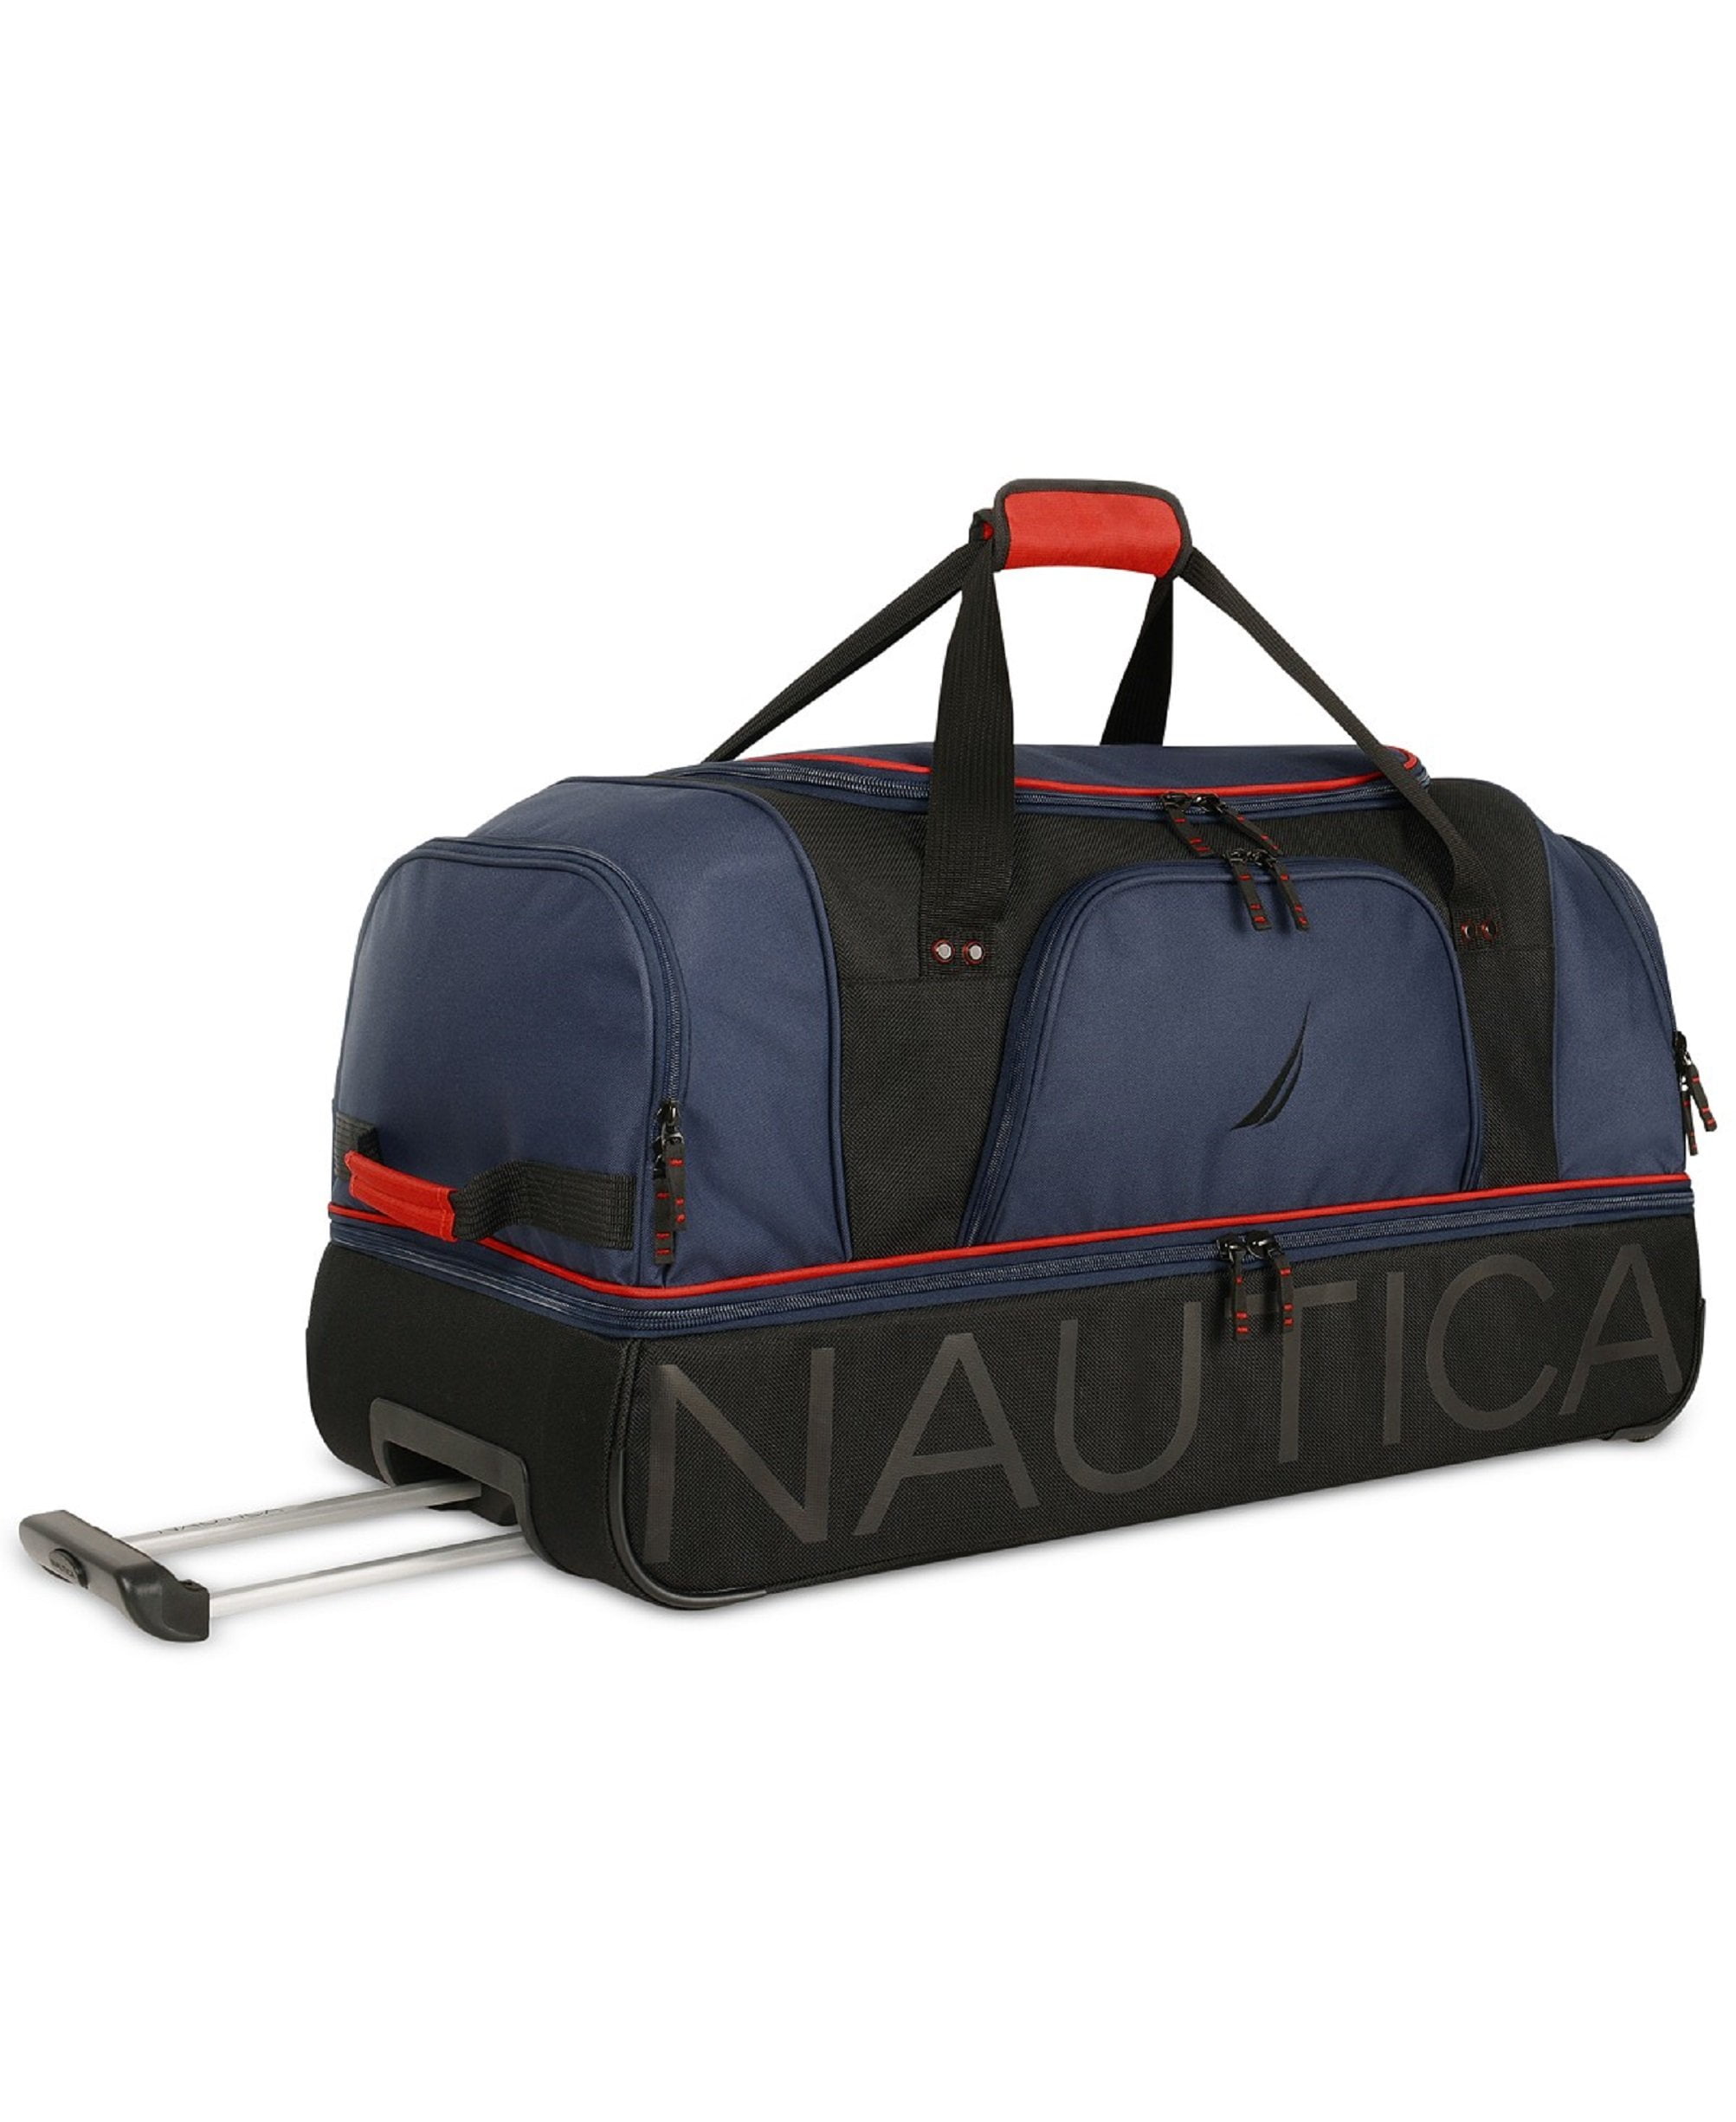 Nautica Westport 32" Rolling Duffel Wheeled Travel Bag